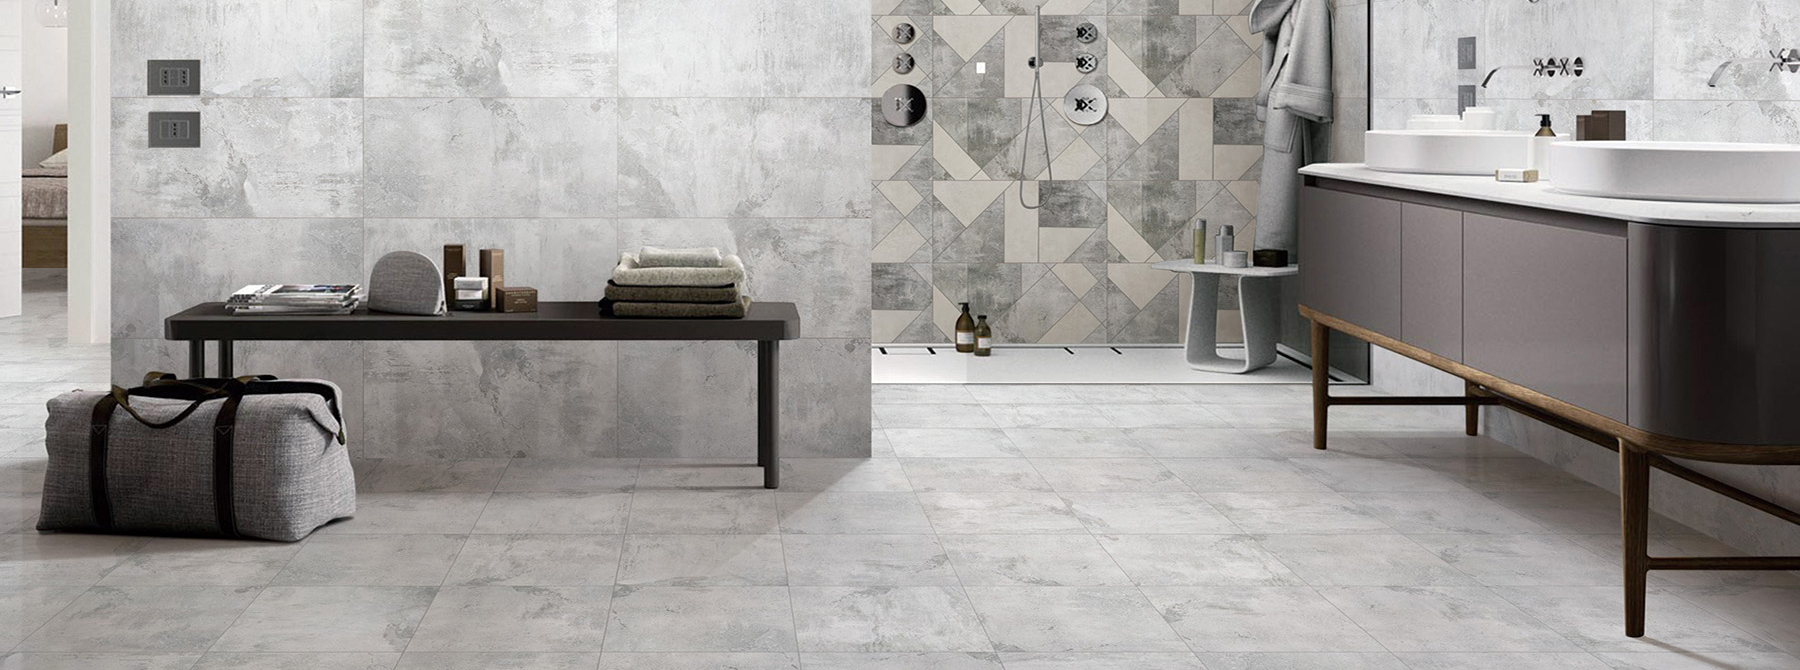 Washing room wall tile - Full polished marble tiles Wooden tiles VPM60316JB  VPM60317JB VPM60318JB VPM60319JB -60x60 80x80cm/24x2-Wooden  series-Porcelain Tiles Manufacturer & Supplier | Valensa Ceramics